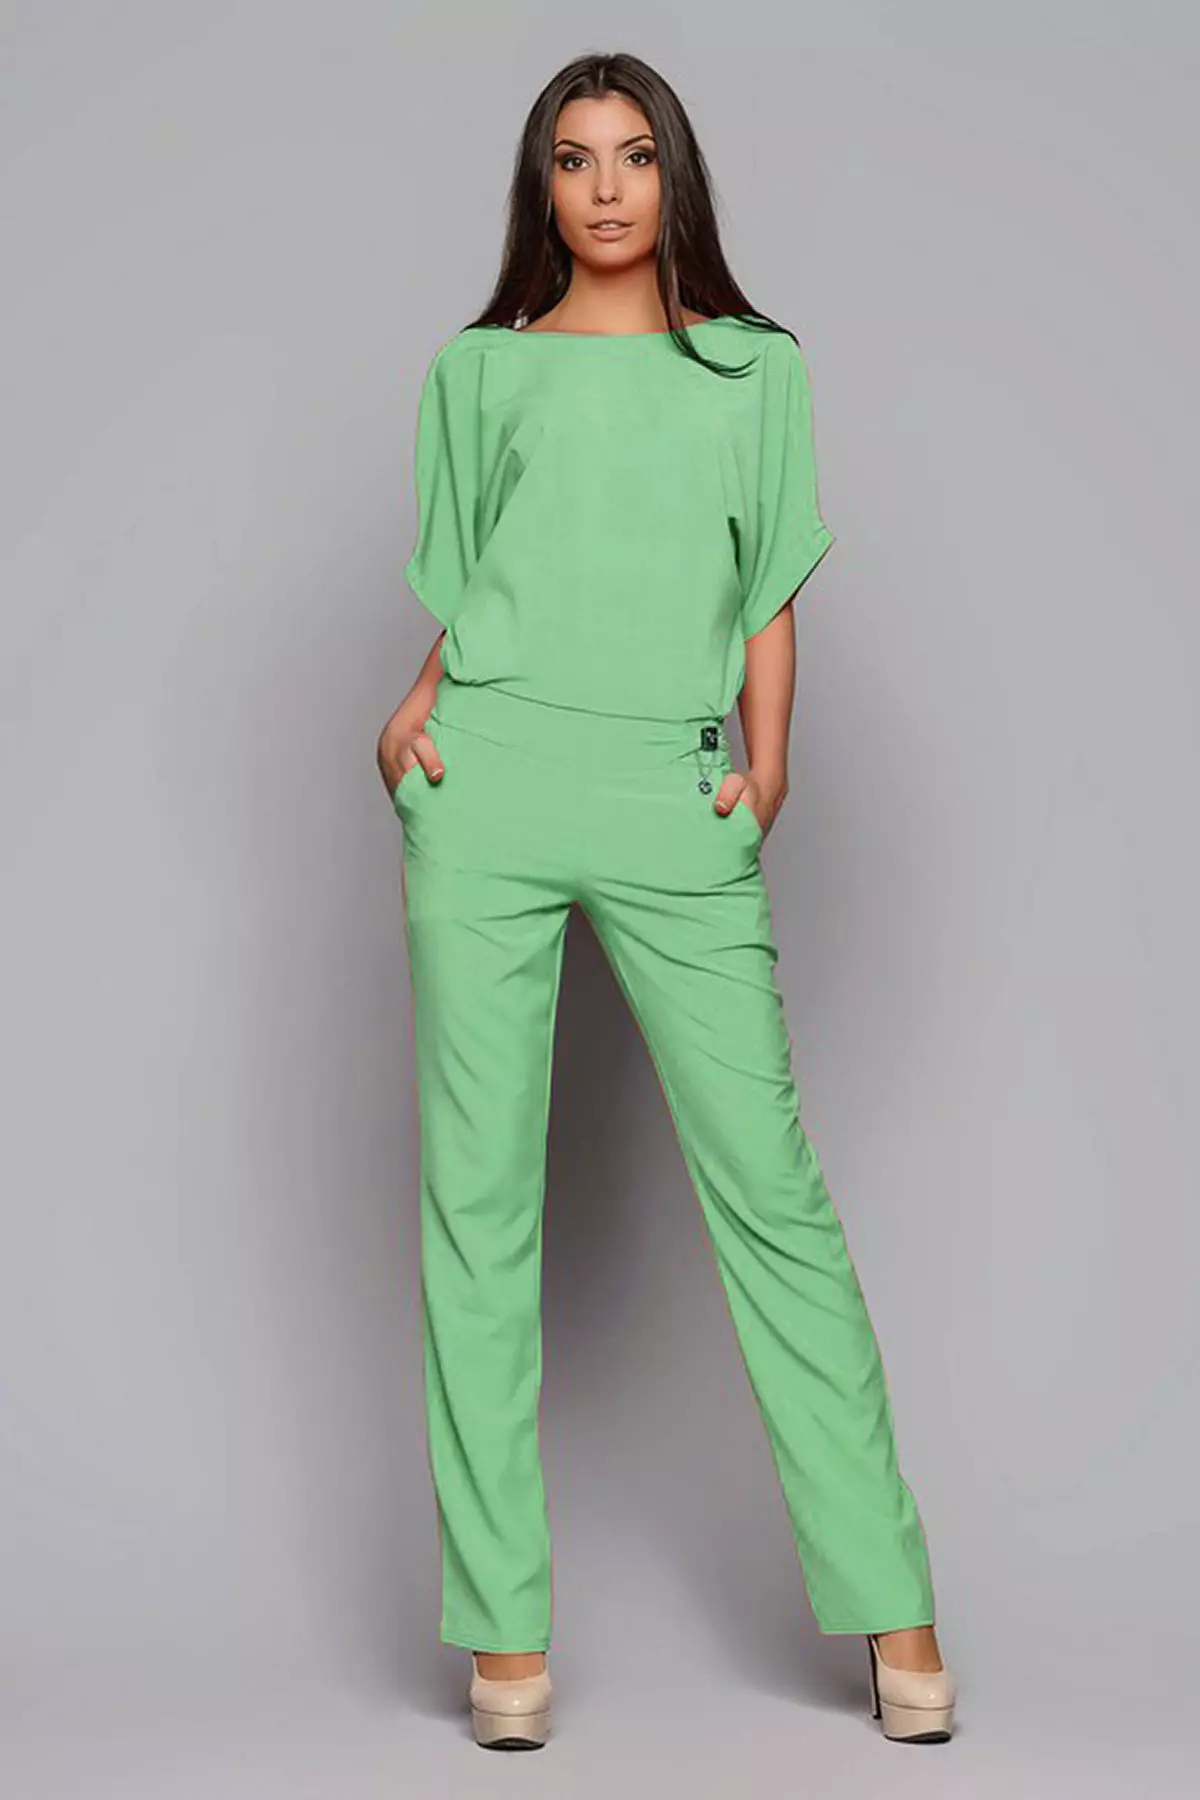 Celana Mode 2021: Model Bergaya Wanita, Tren Fashion 917_147